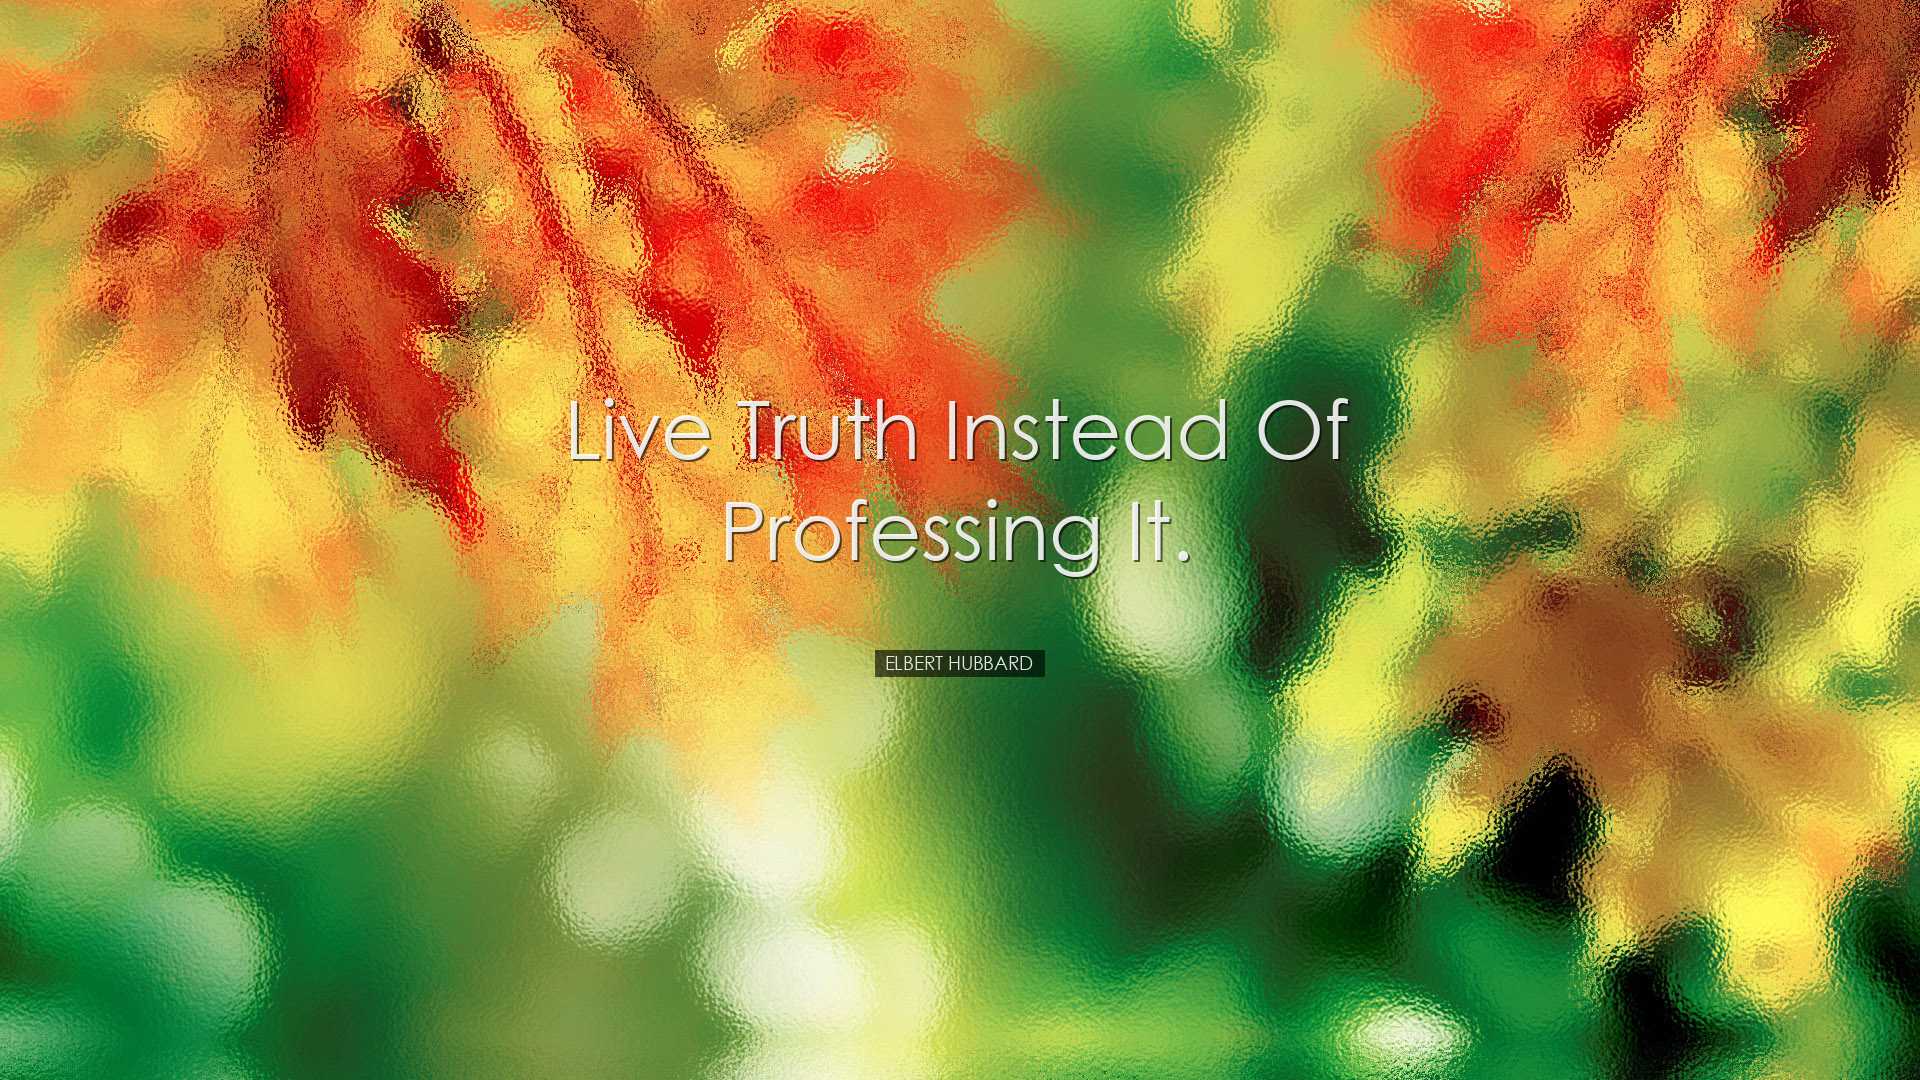 Live truth instead of professing it. - Elbert Hubbard